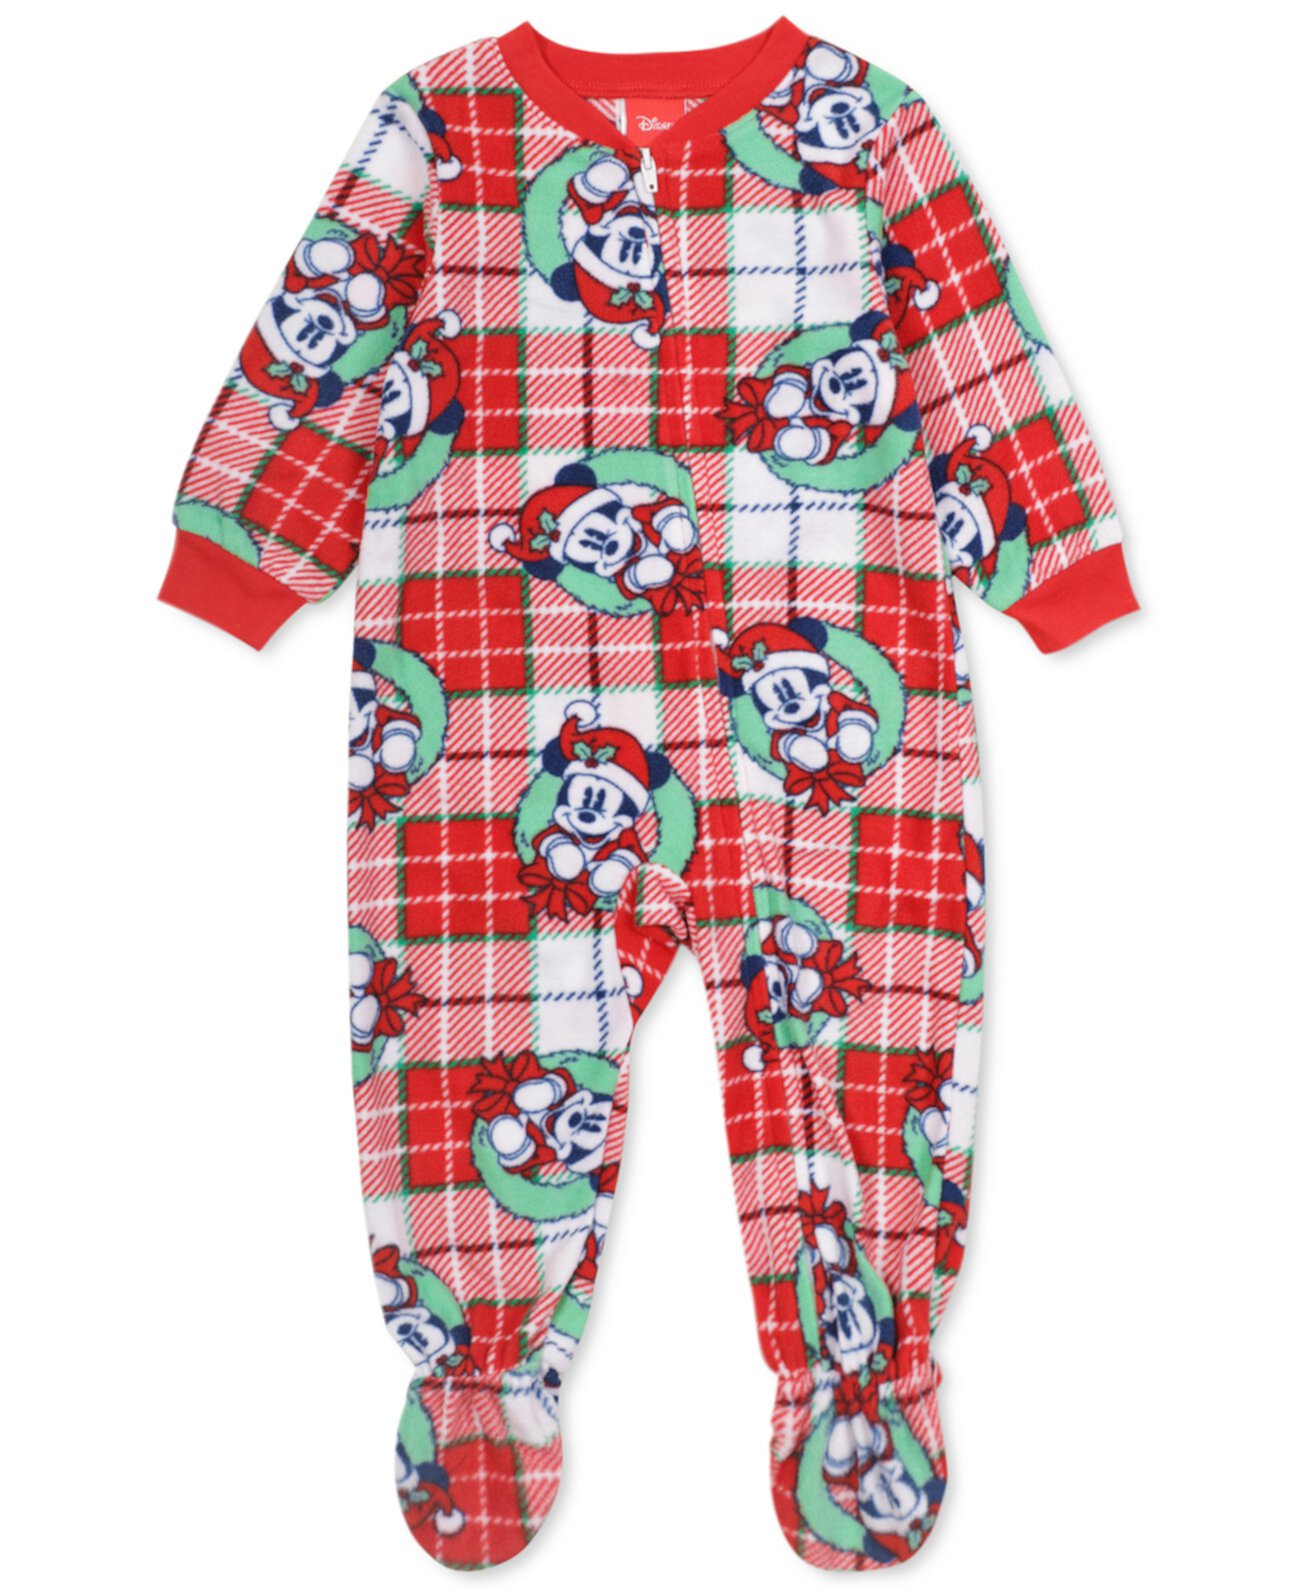 Семейный пижамный комплект с Микки Маусом для младенцев Briefly Stated